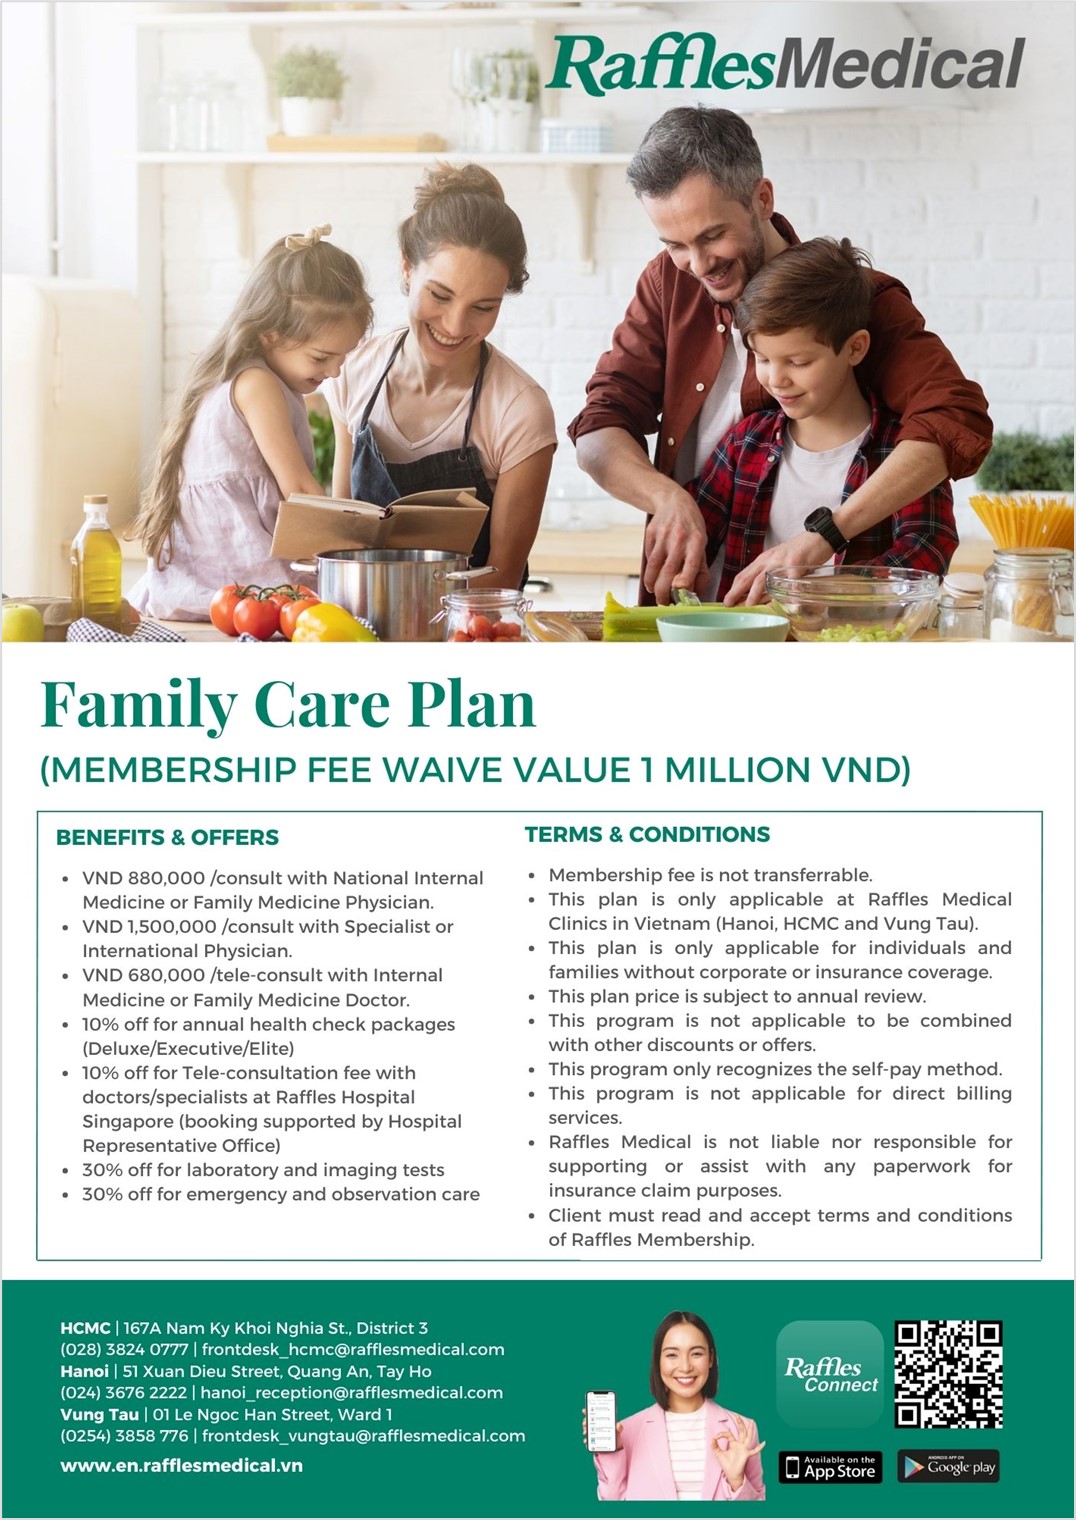 family care plan